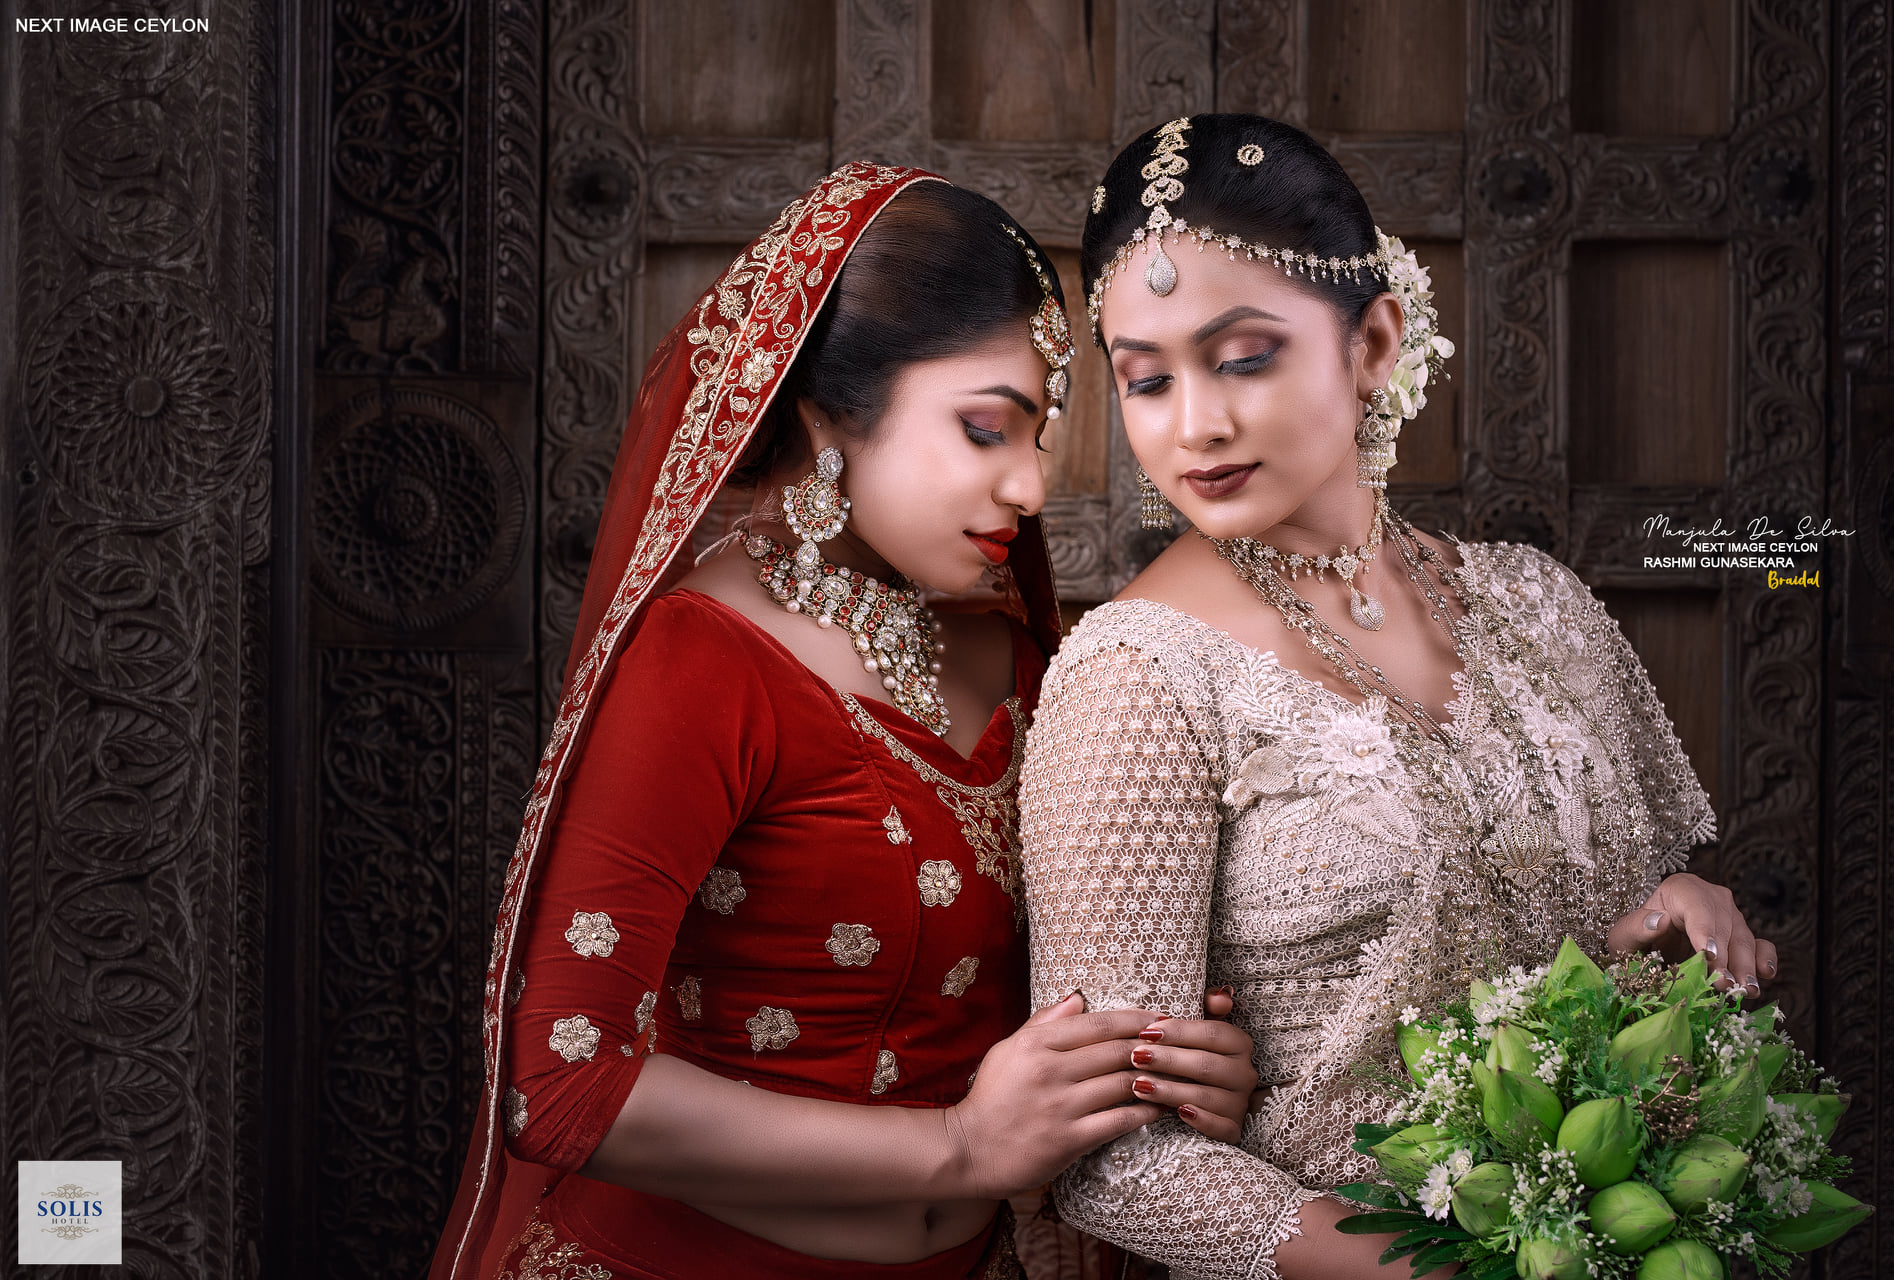 Dilsha & Teesha  NEXT IMAGE CEYLON bridal model photgraphy